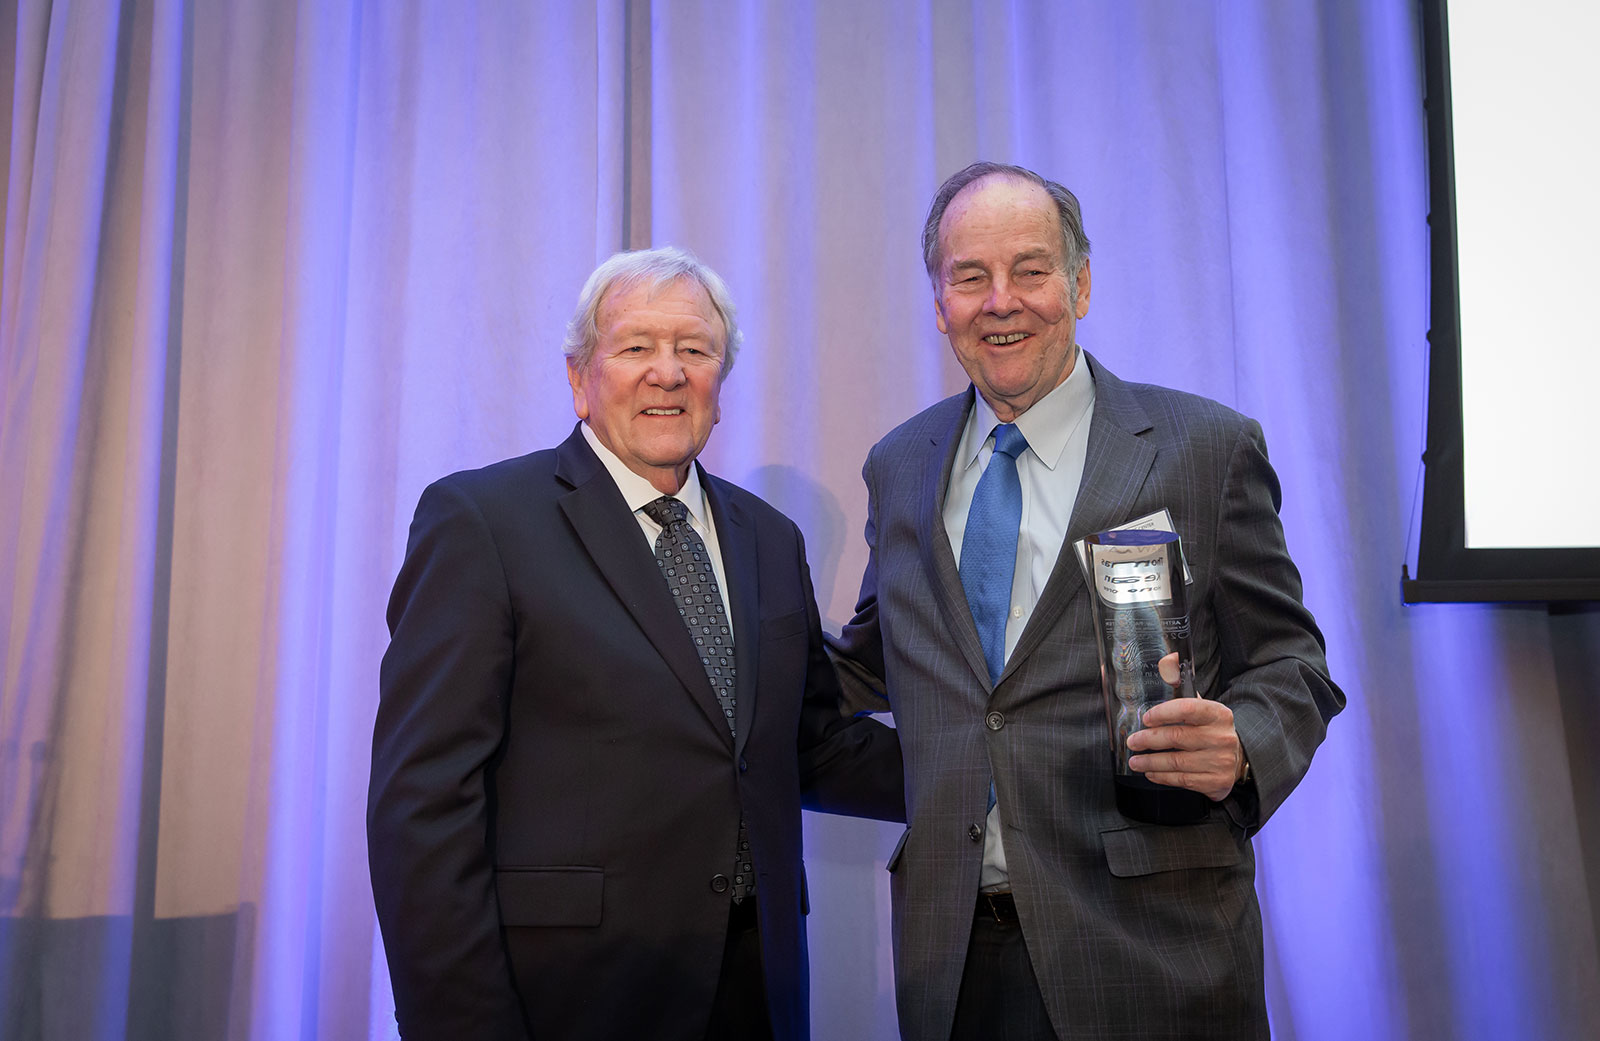  Board member Bill Nielsen (left) and Larry Foster Award honoree Tom Kean, Sr. 